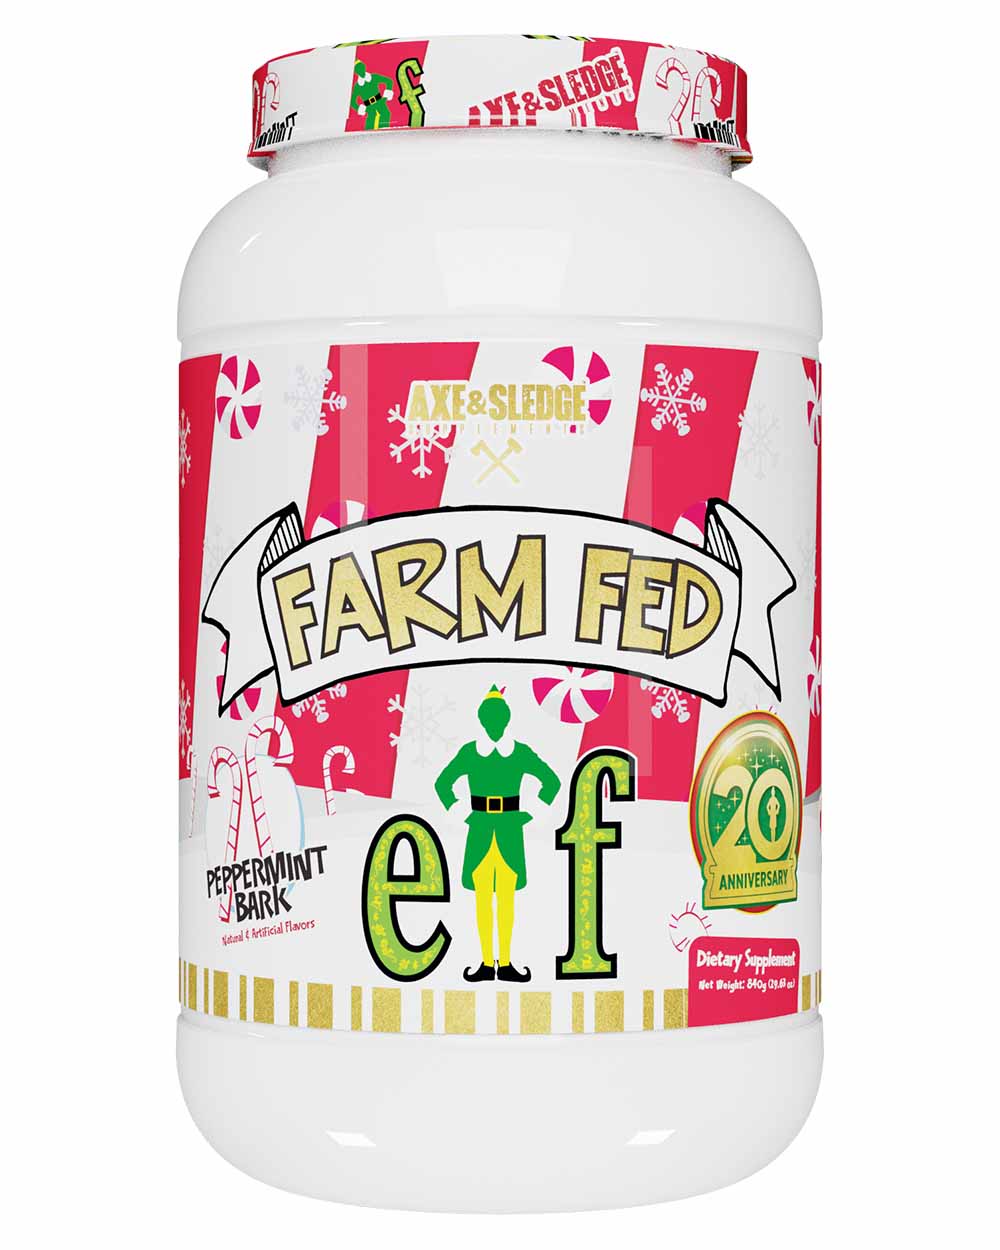 FARM FED // Grass-Fed Whey Protein Isolate